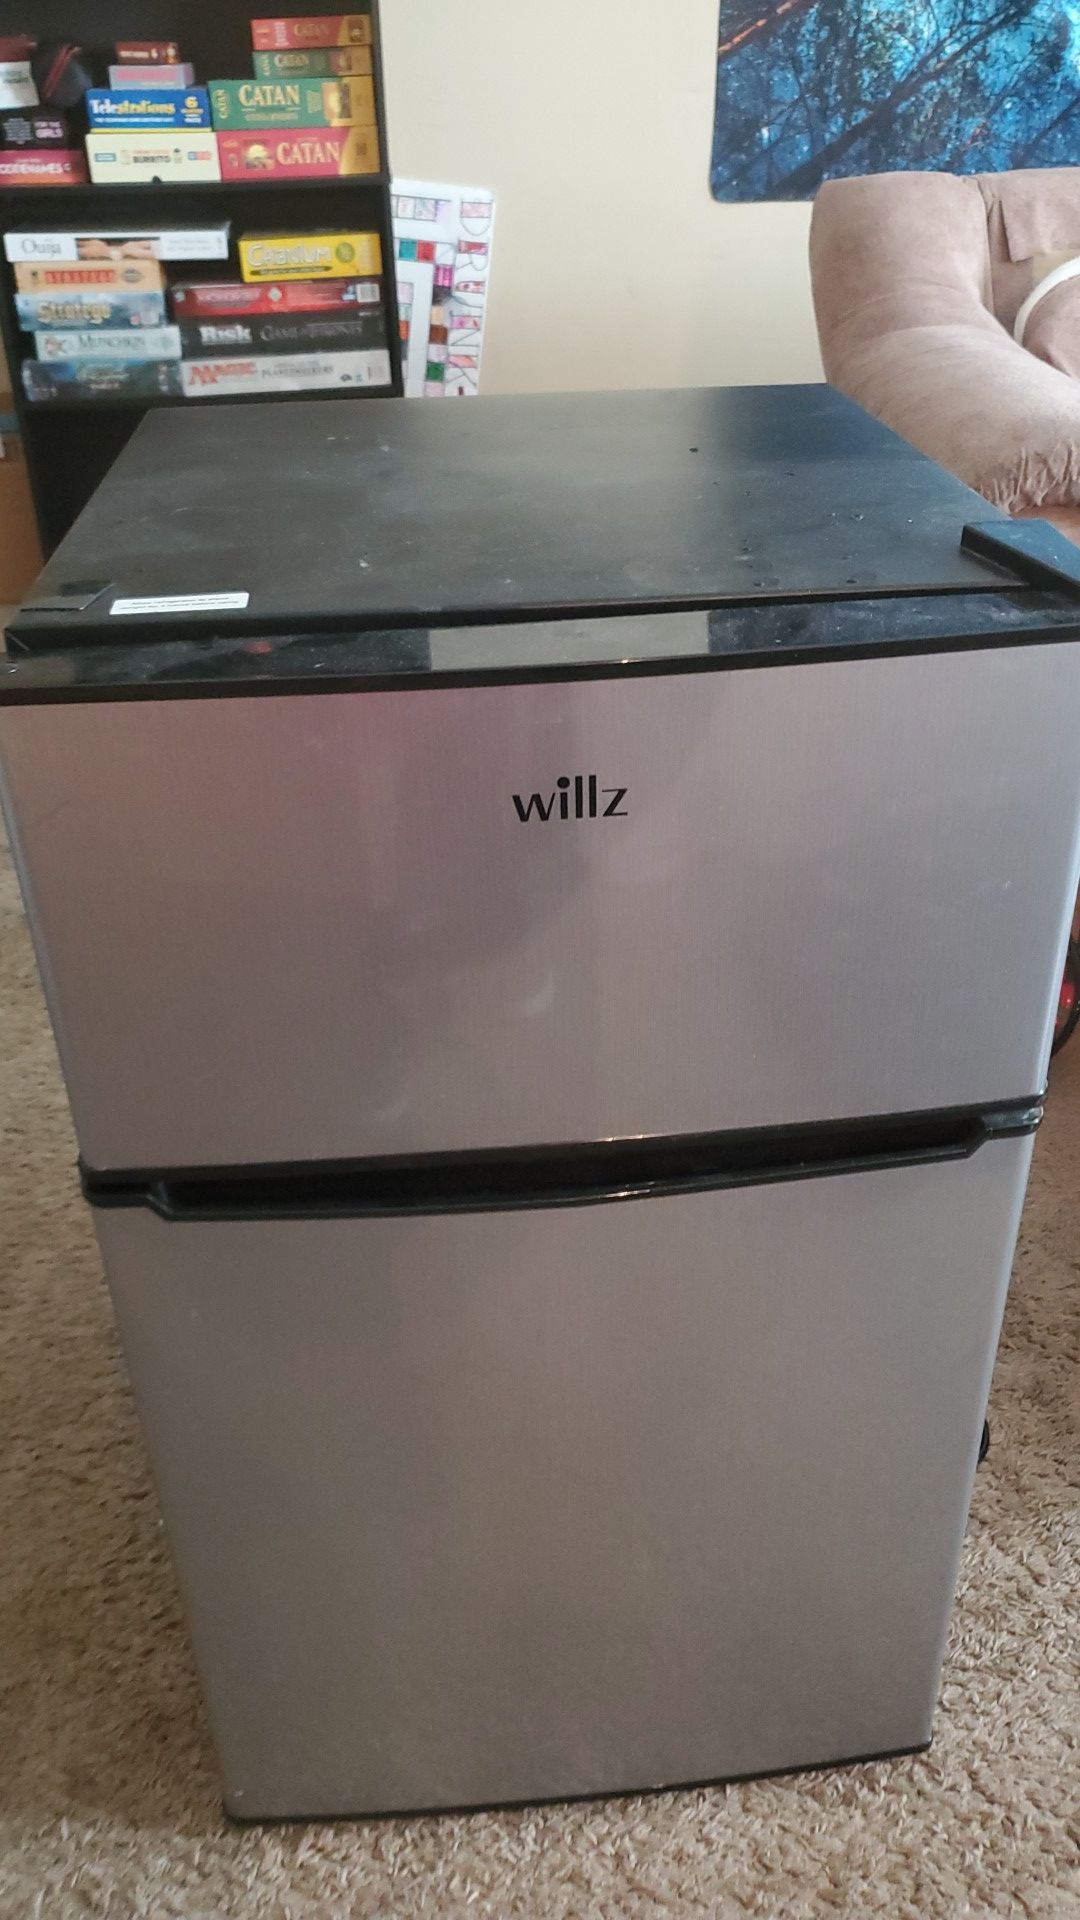 Willz stainless steel mini-fridge